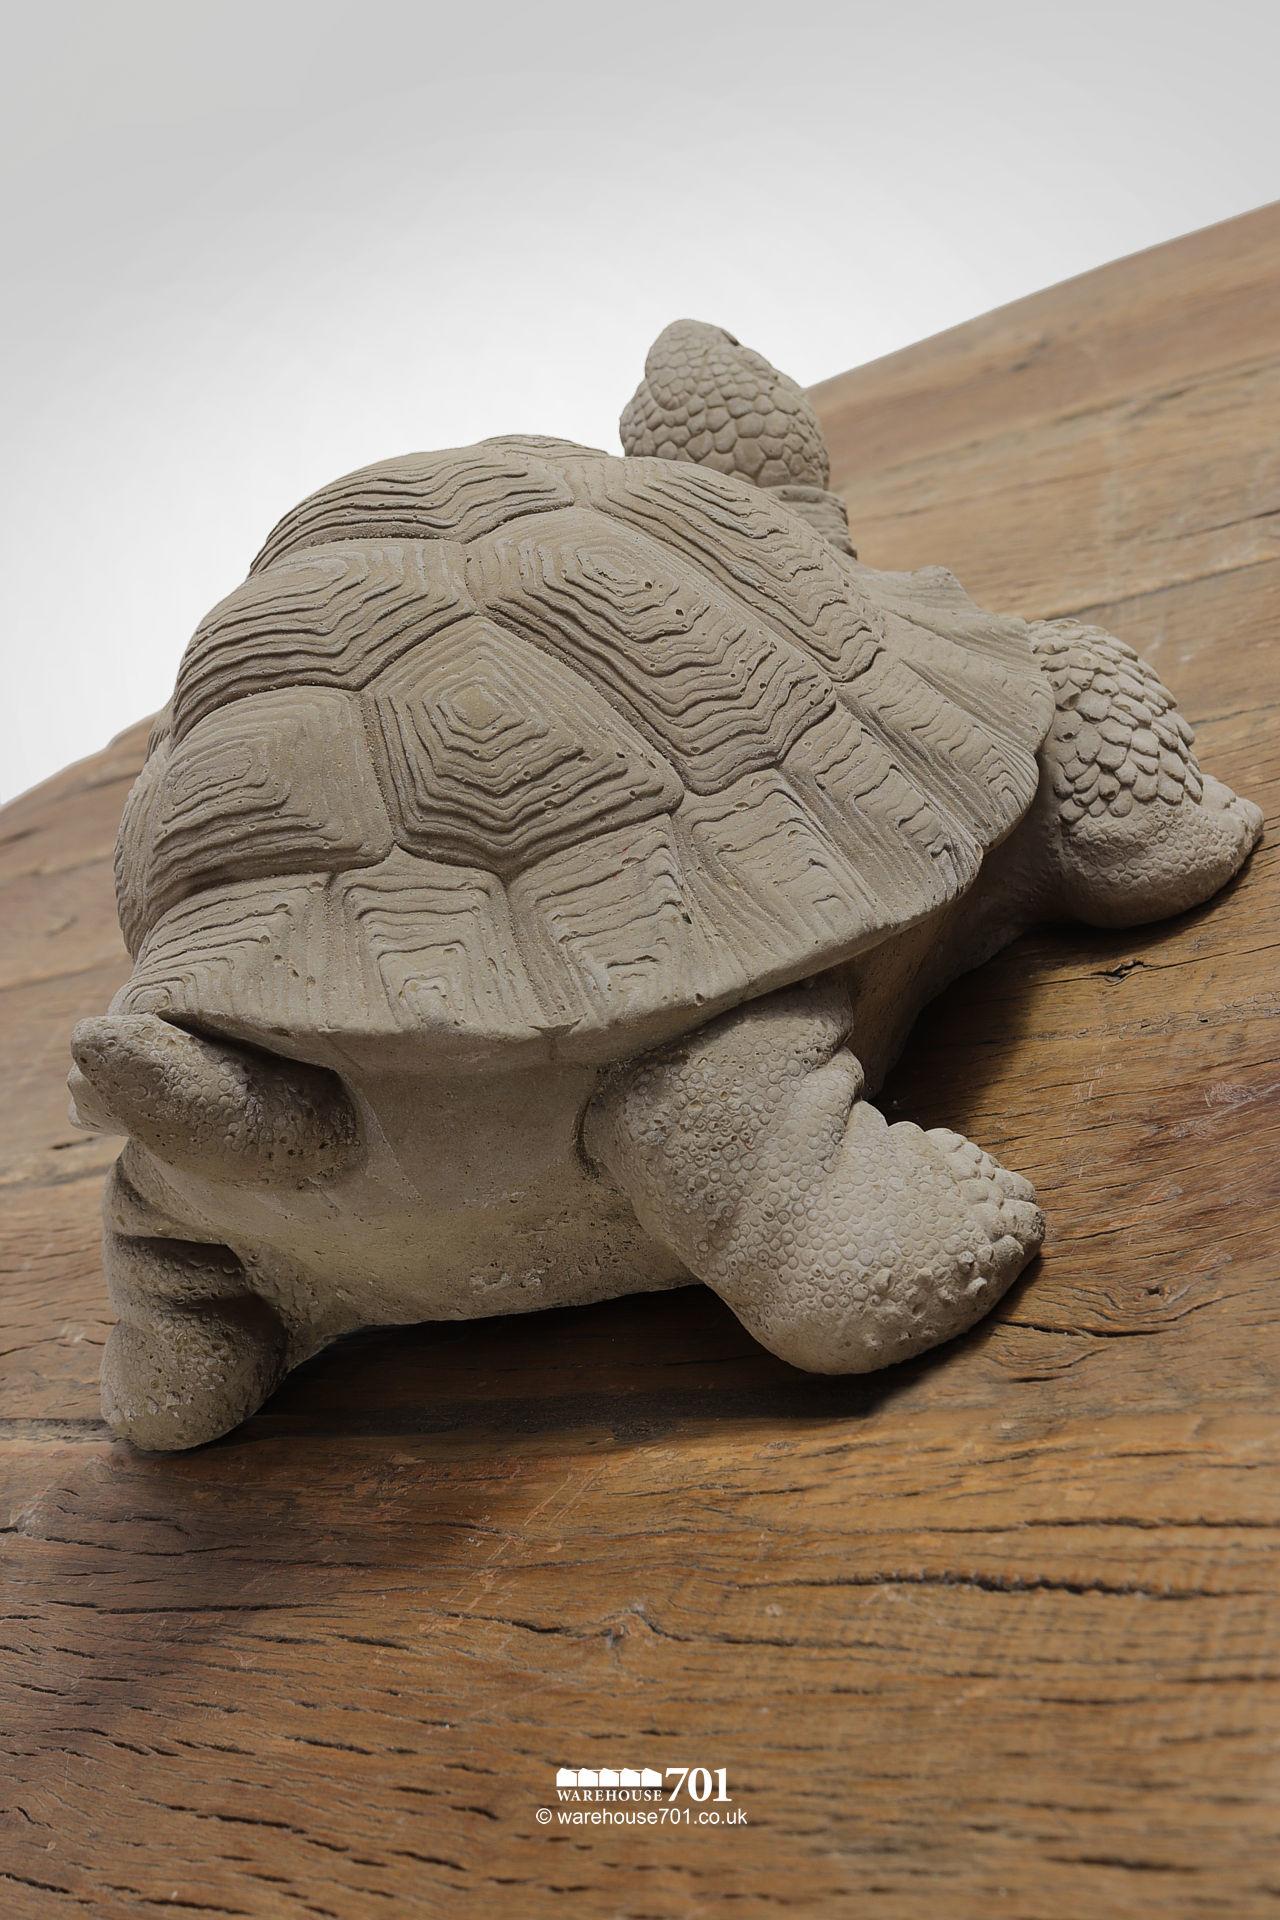 New Cast Stone Tortoise Garden Statue #3